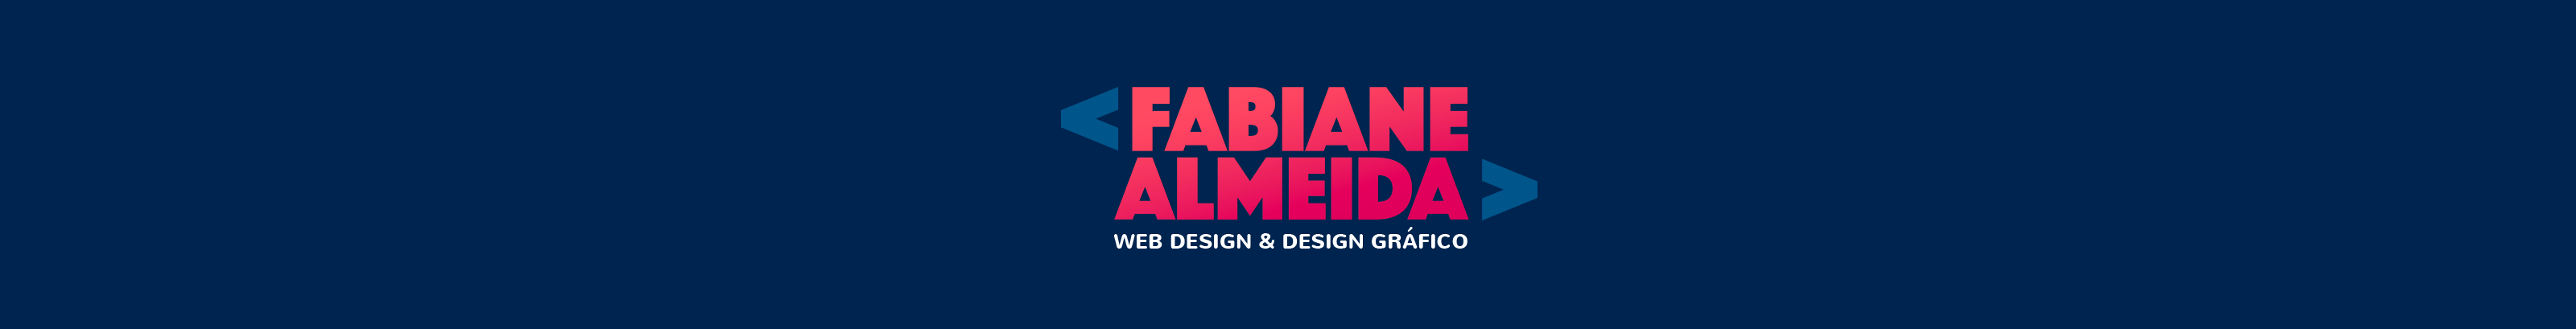 Fabiane Almeida's profile banner